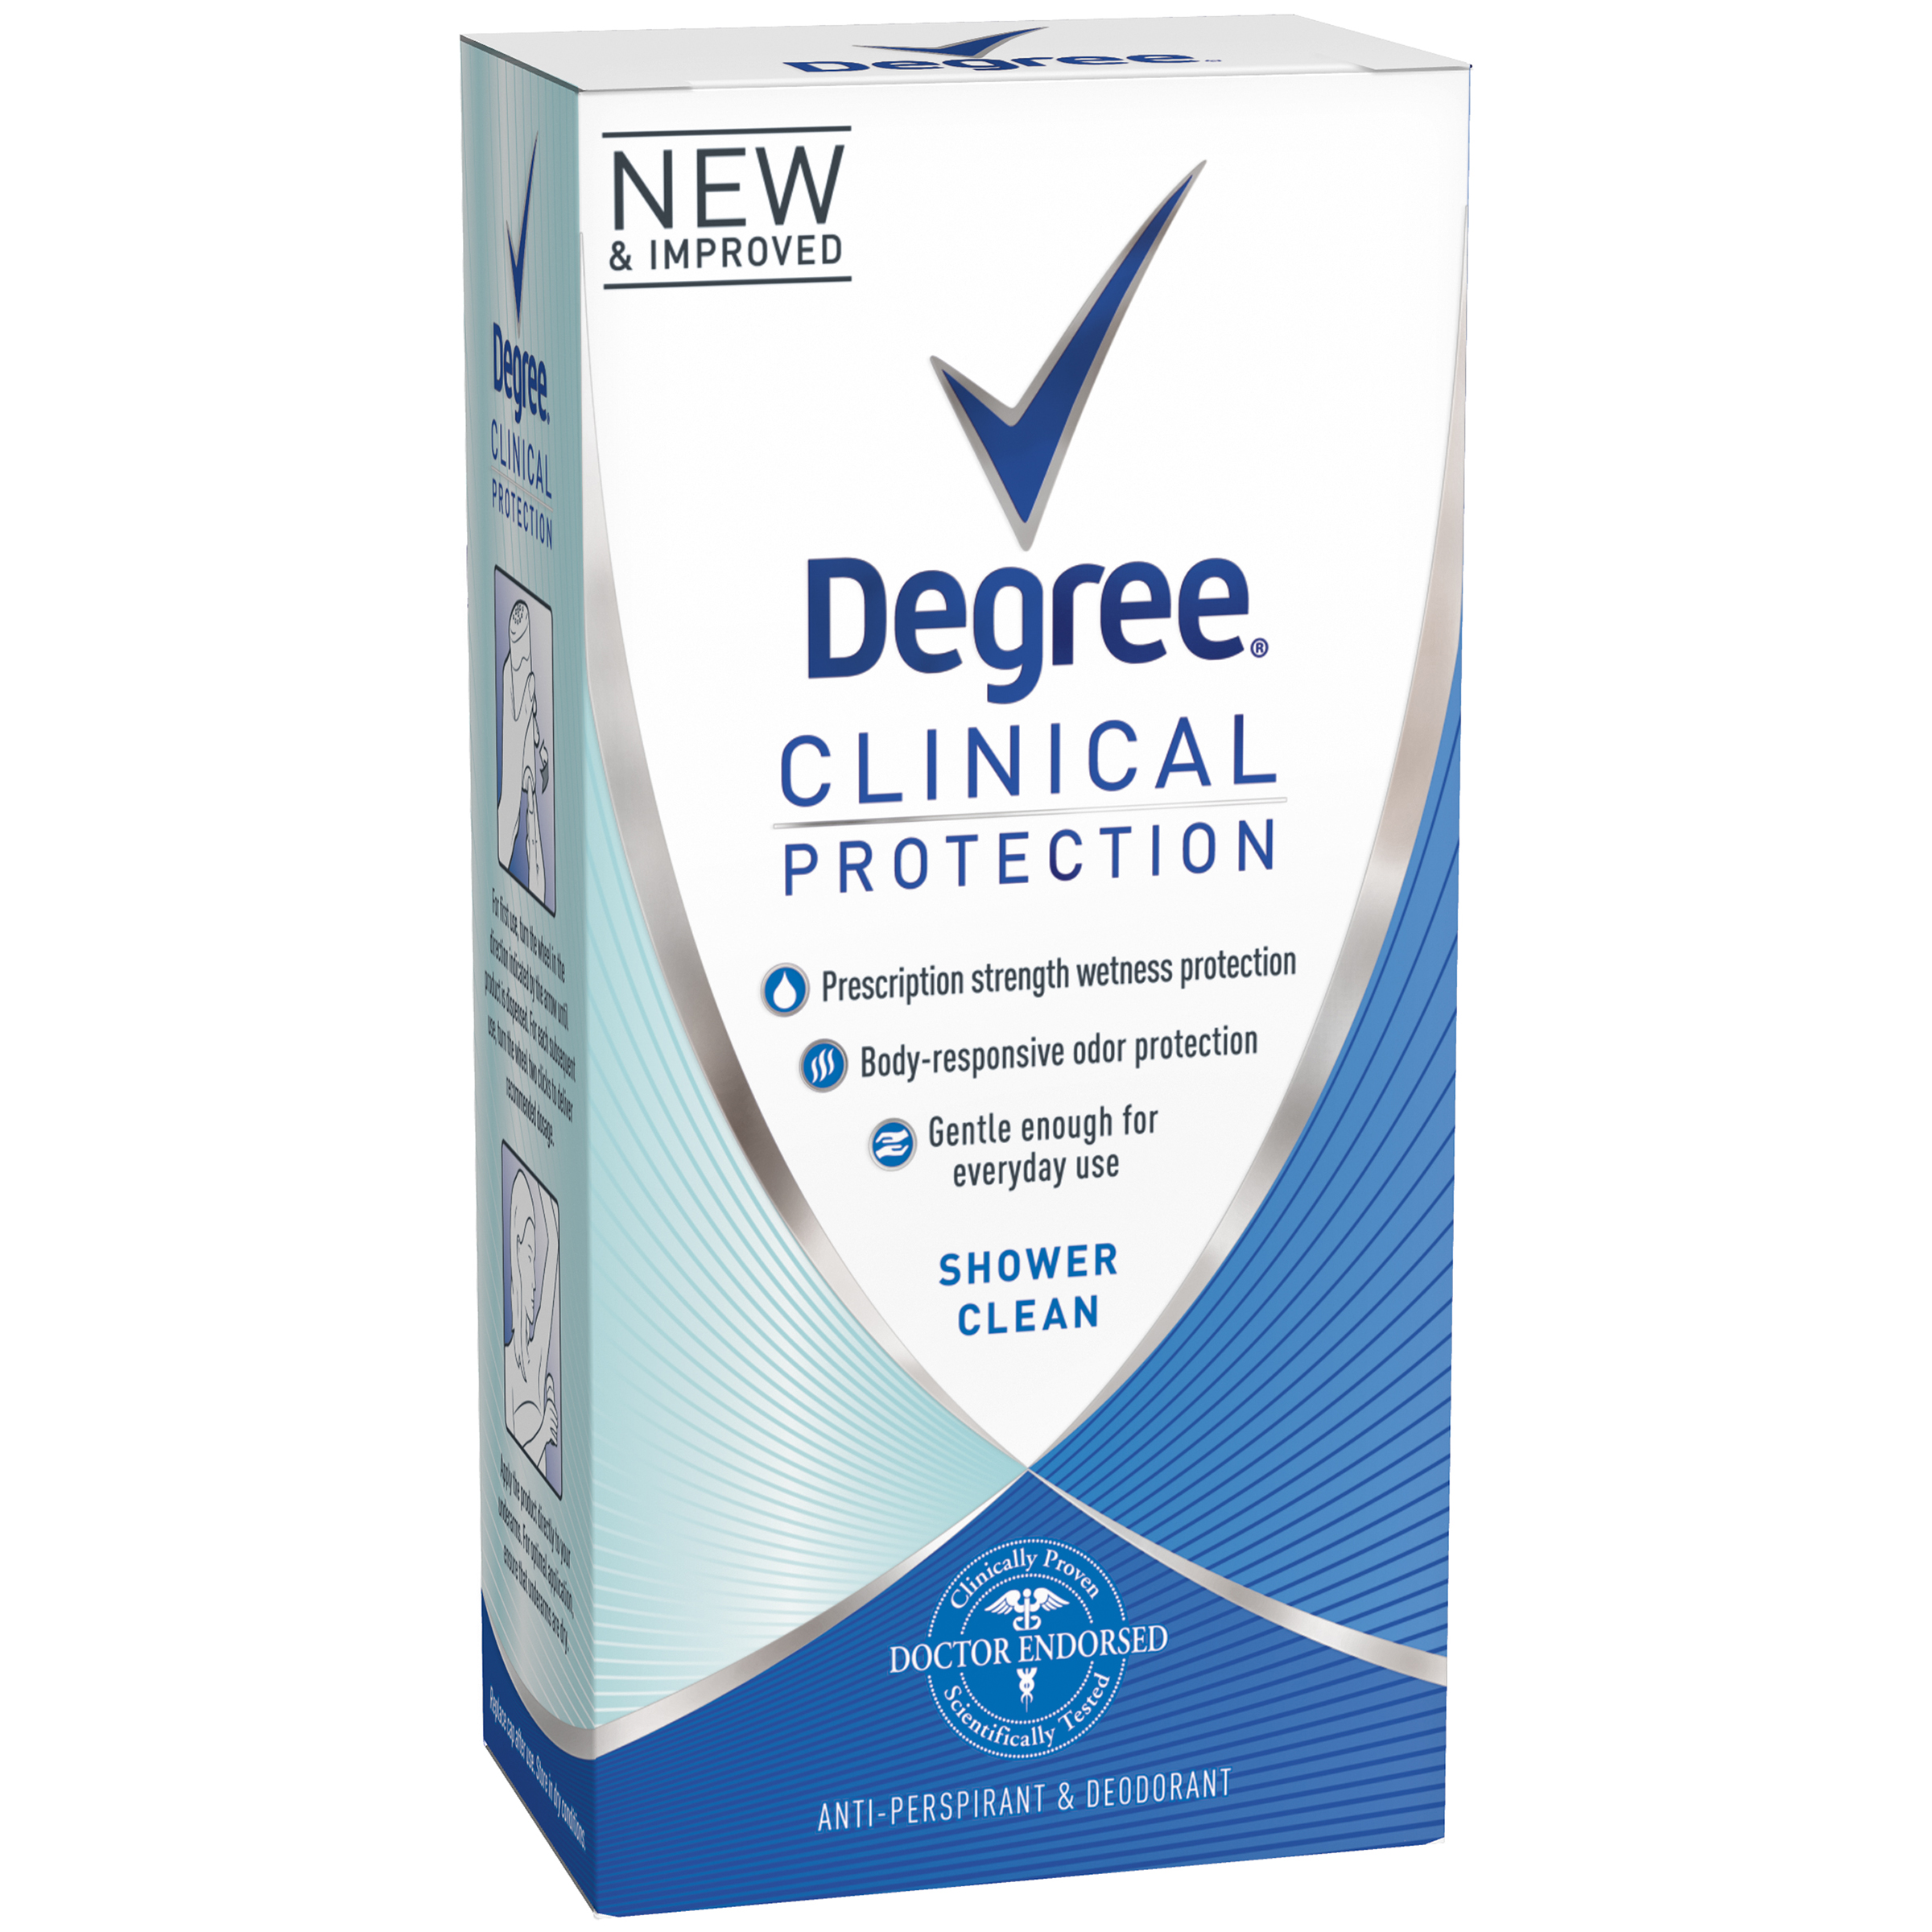 Degree Clinical Protection Anti-Perspirant & Deodorant, Women, Prescription Strength, Shower Clean, 1.7 oz (48 g)